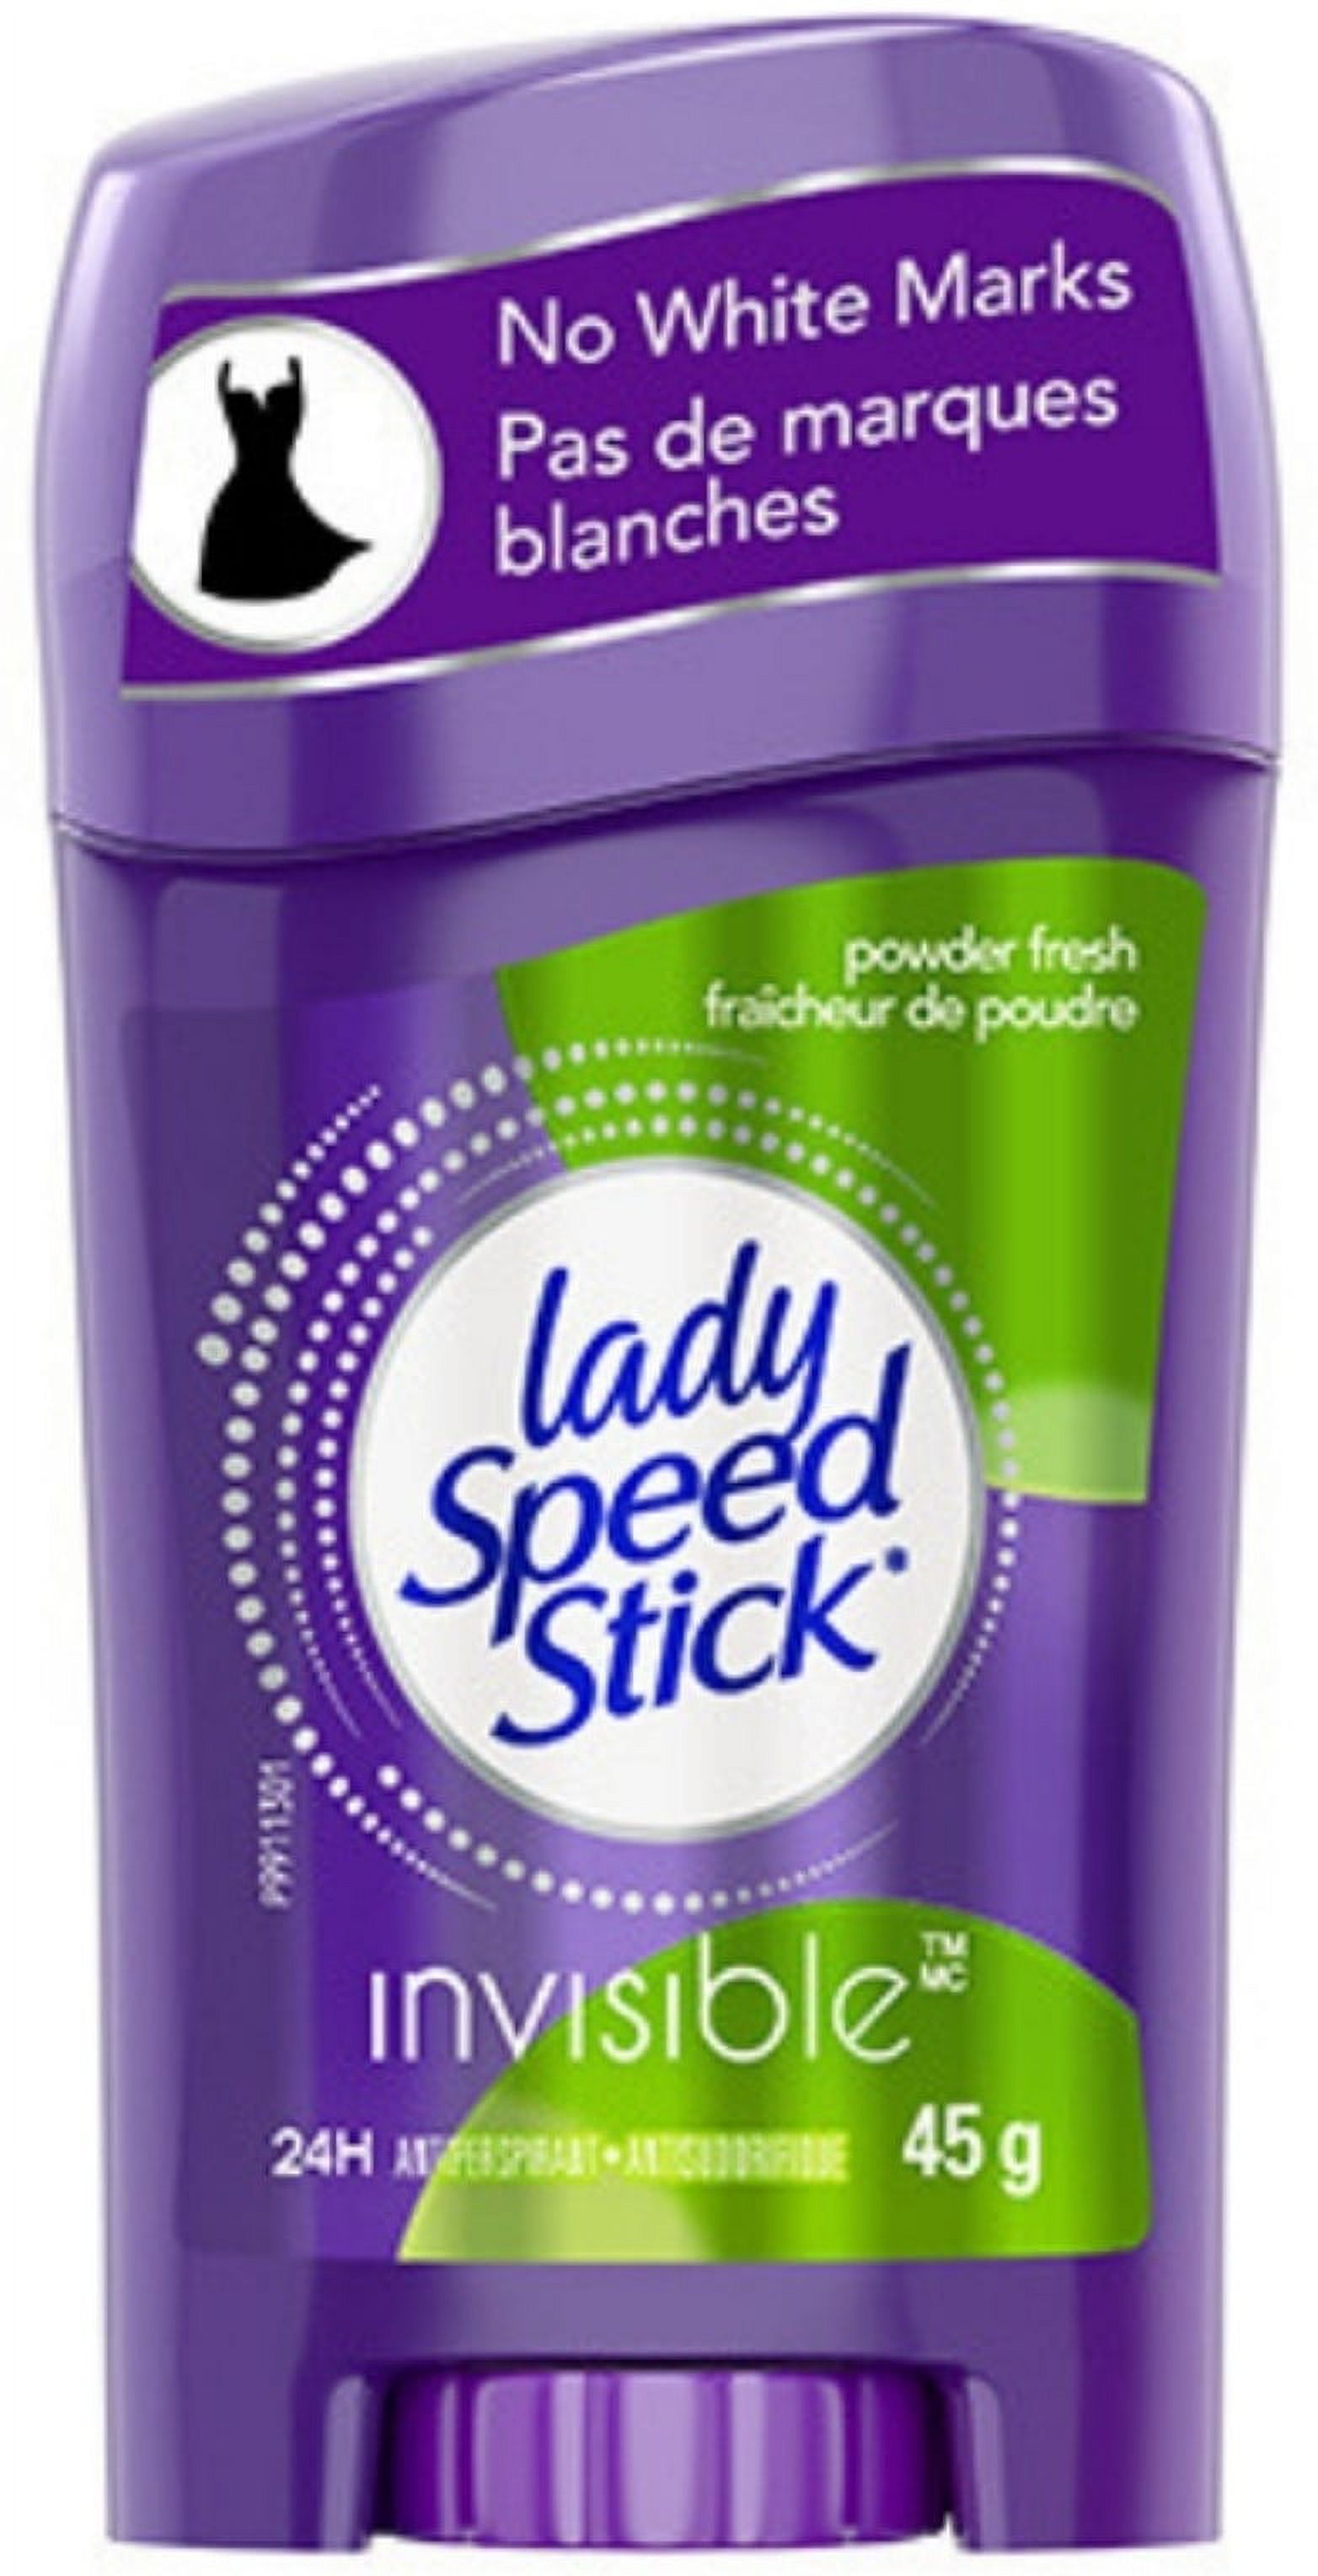 Lady Speed Stick Invisible Dry Antiperspirant Deodorant, Powder Fresh, 1.4 oz. - image 1 of 4